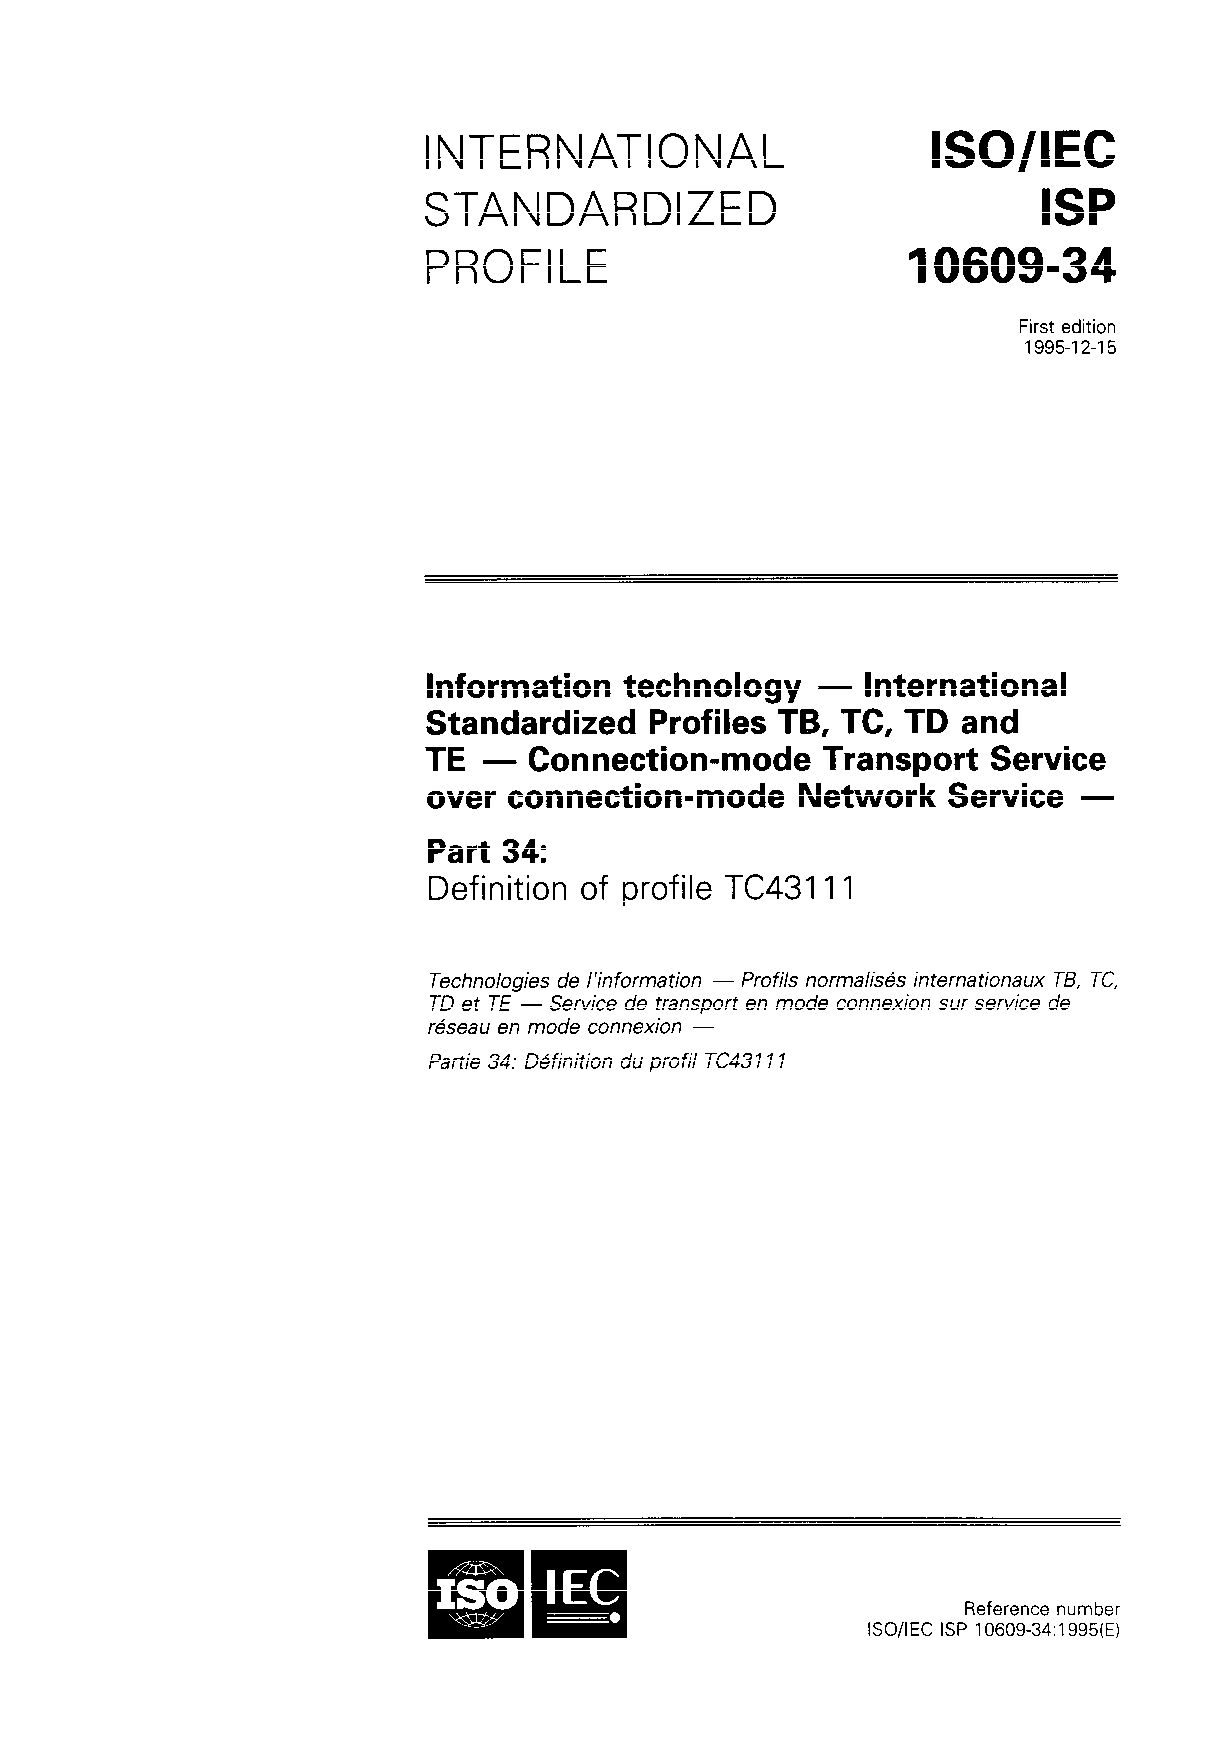 ISO/IEC ISP 10609-34:1995